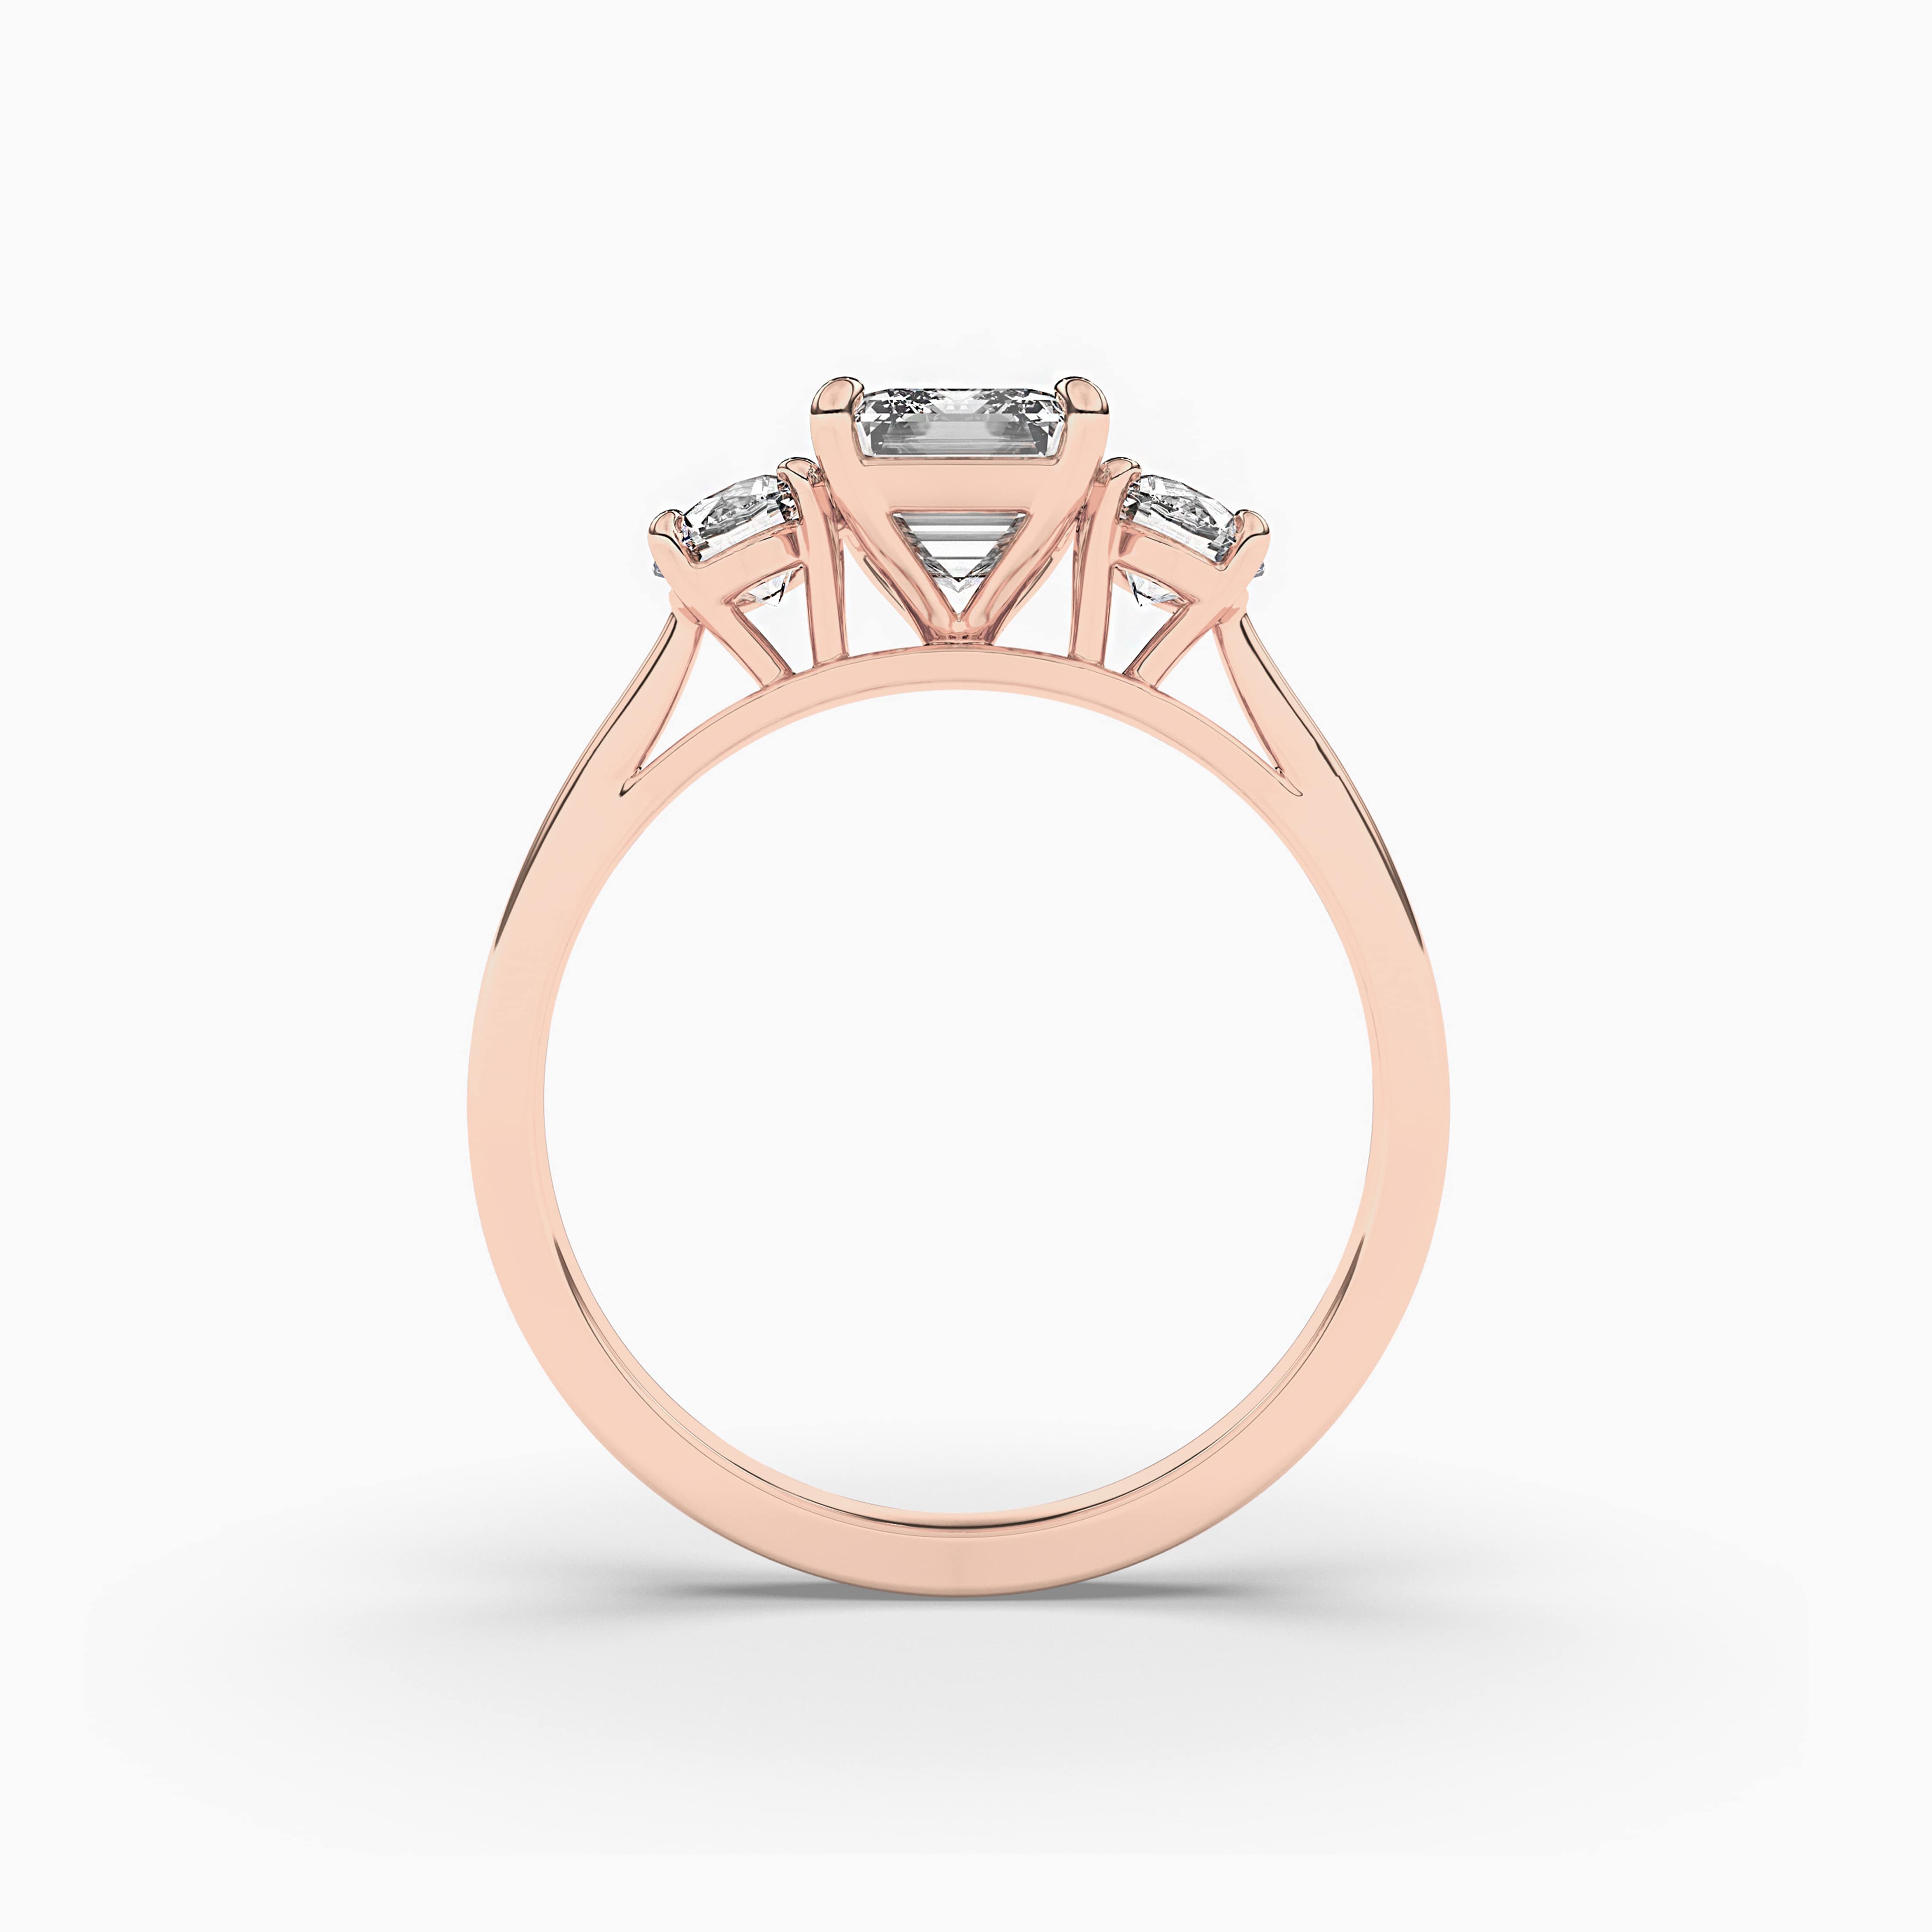 Emerald cut emerald engagement ring rose gold